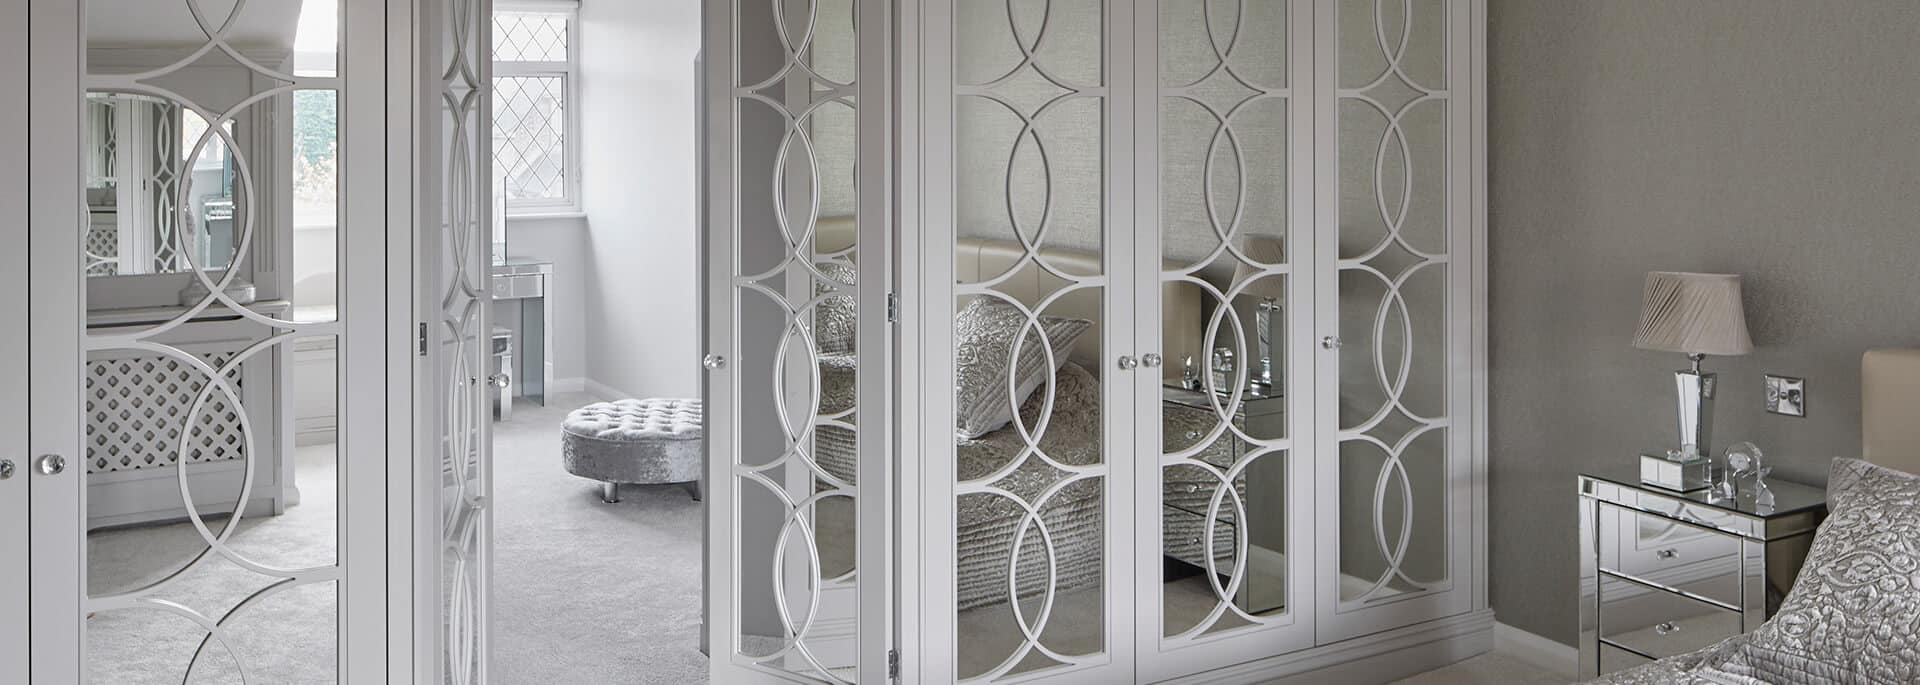 White mirrored wardrobe doors from master bedroom